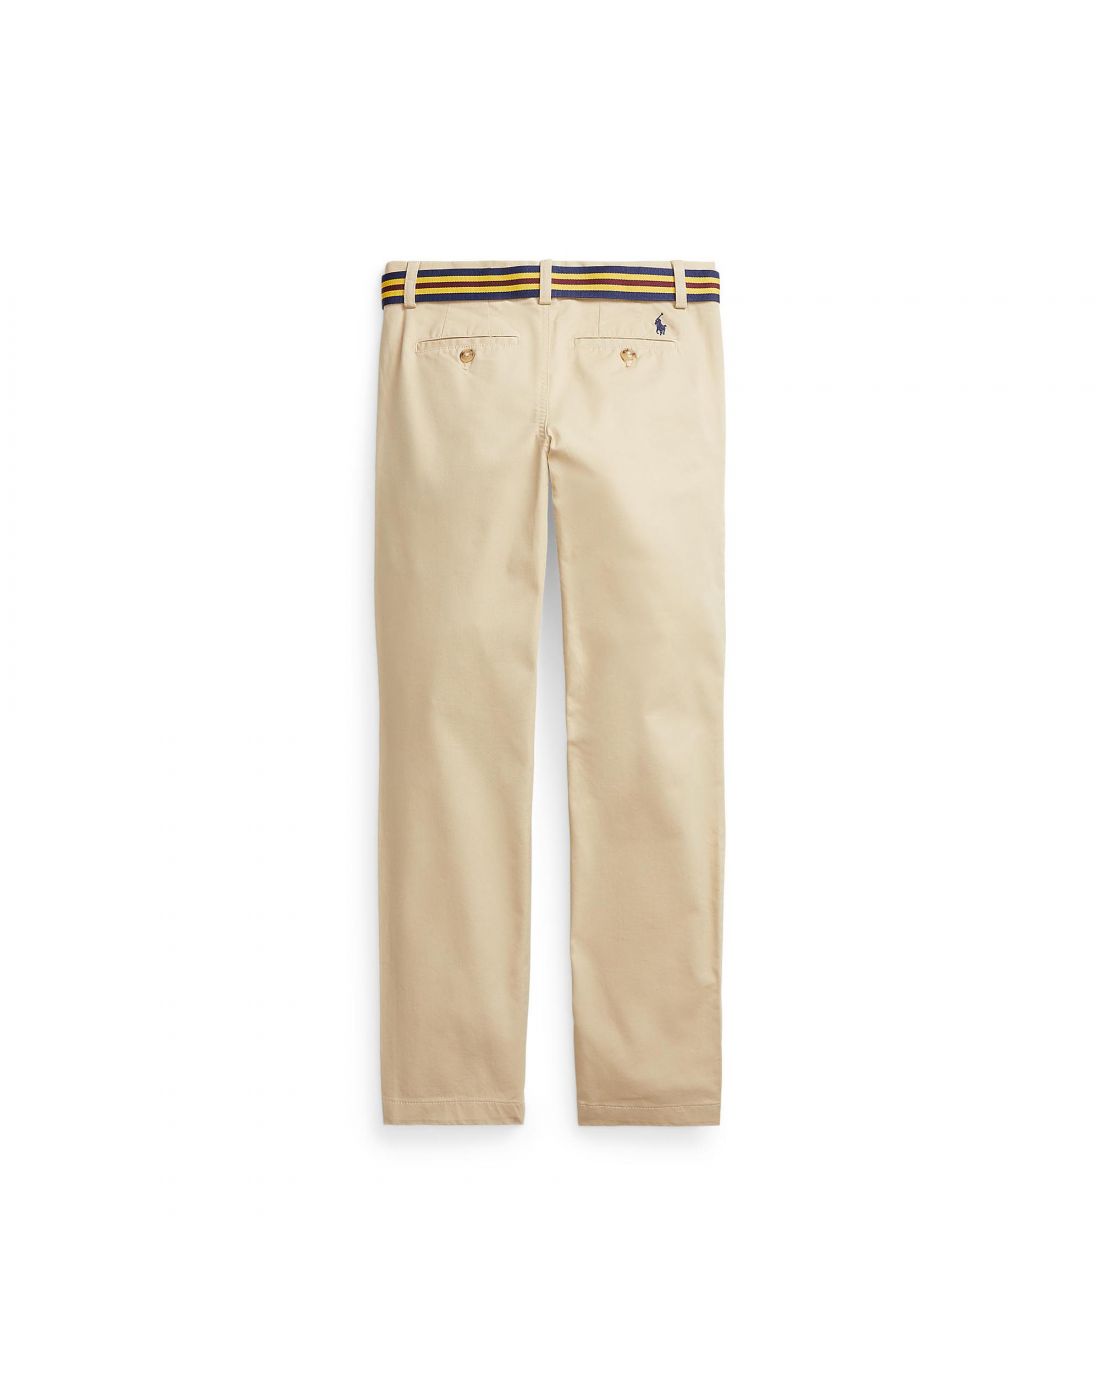 Polo Ralph Lauren Boys Trousers